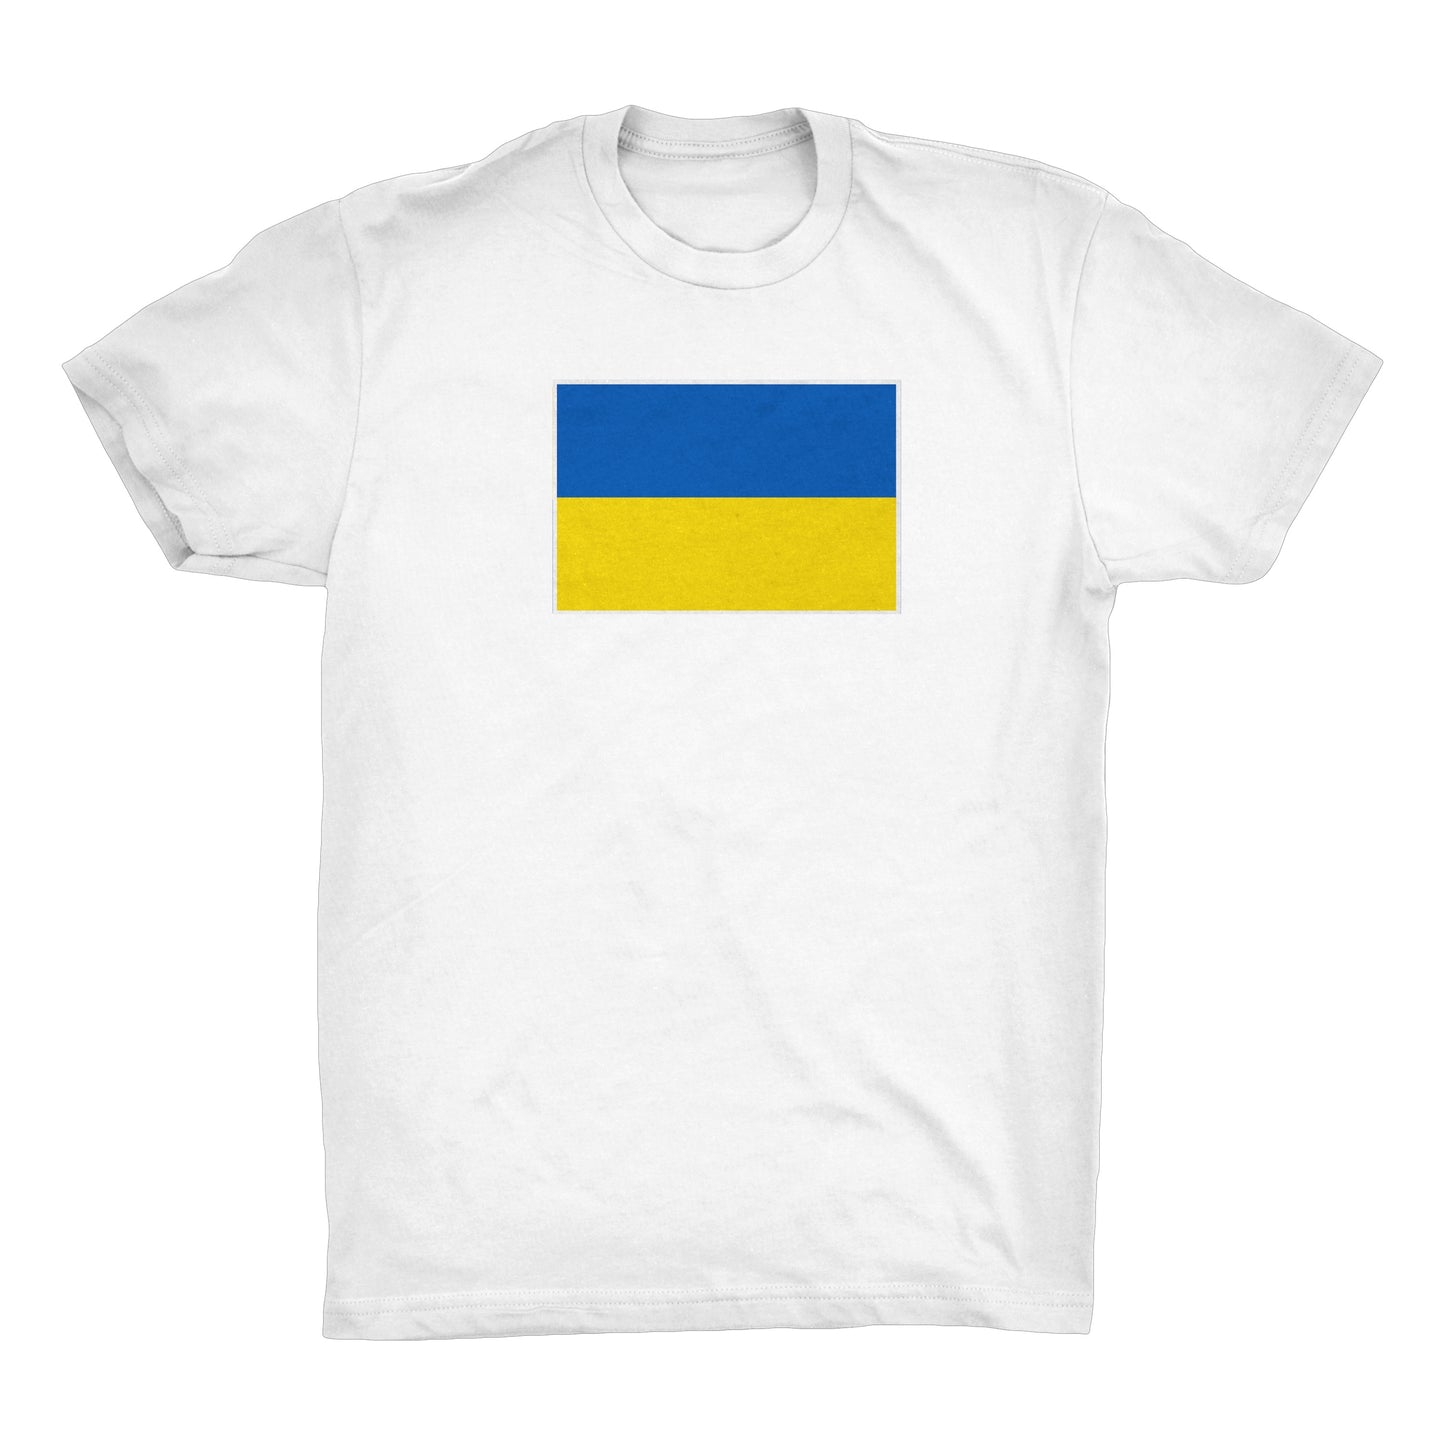 Aid for the Ukranian People- Ukrainian Flag on a White Shirt